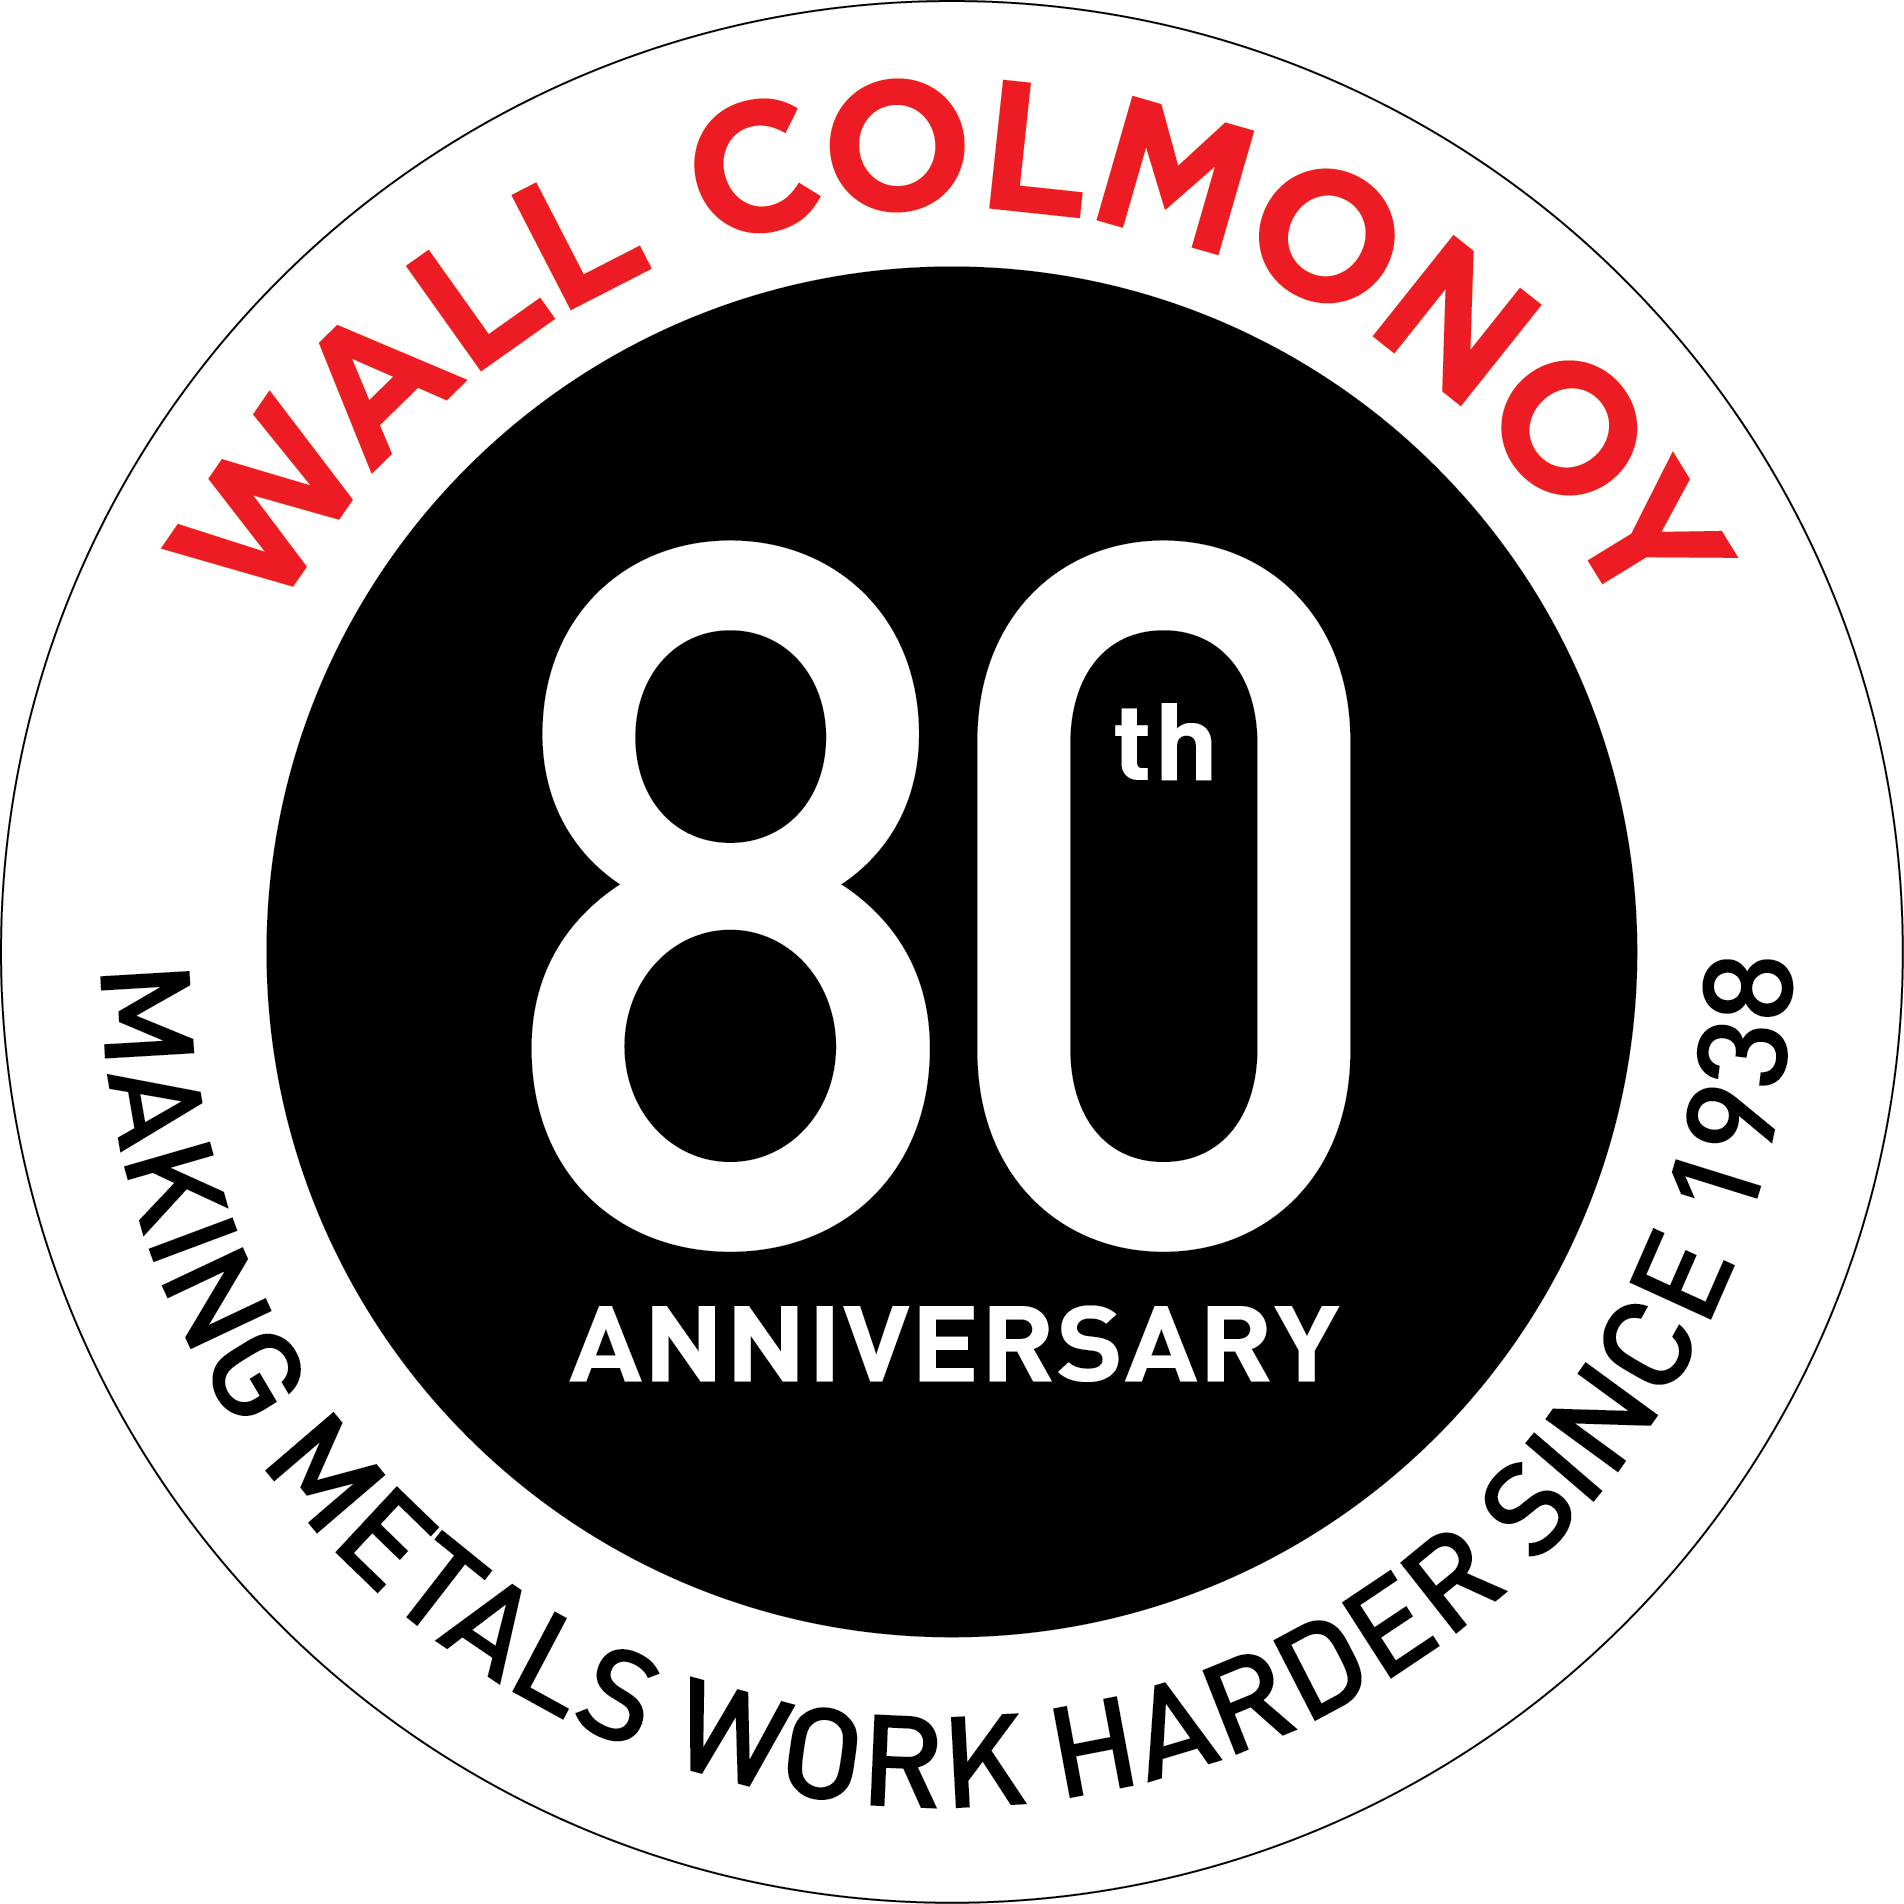 Wall Colmonoy Corp.